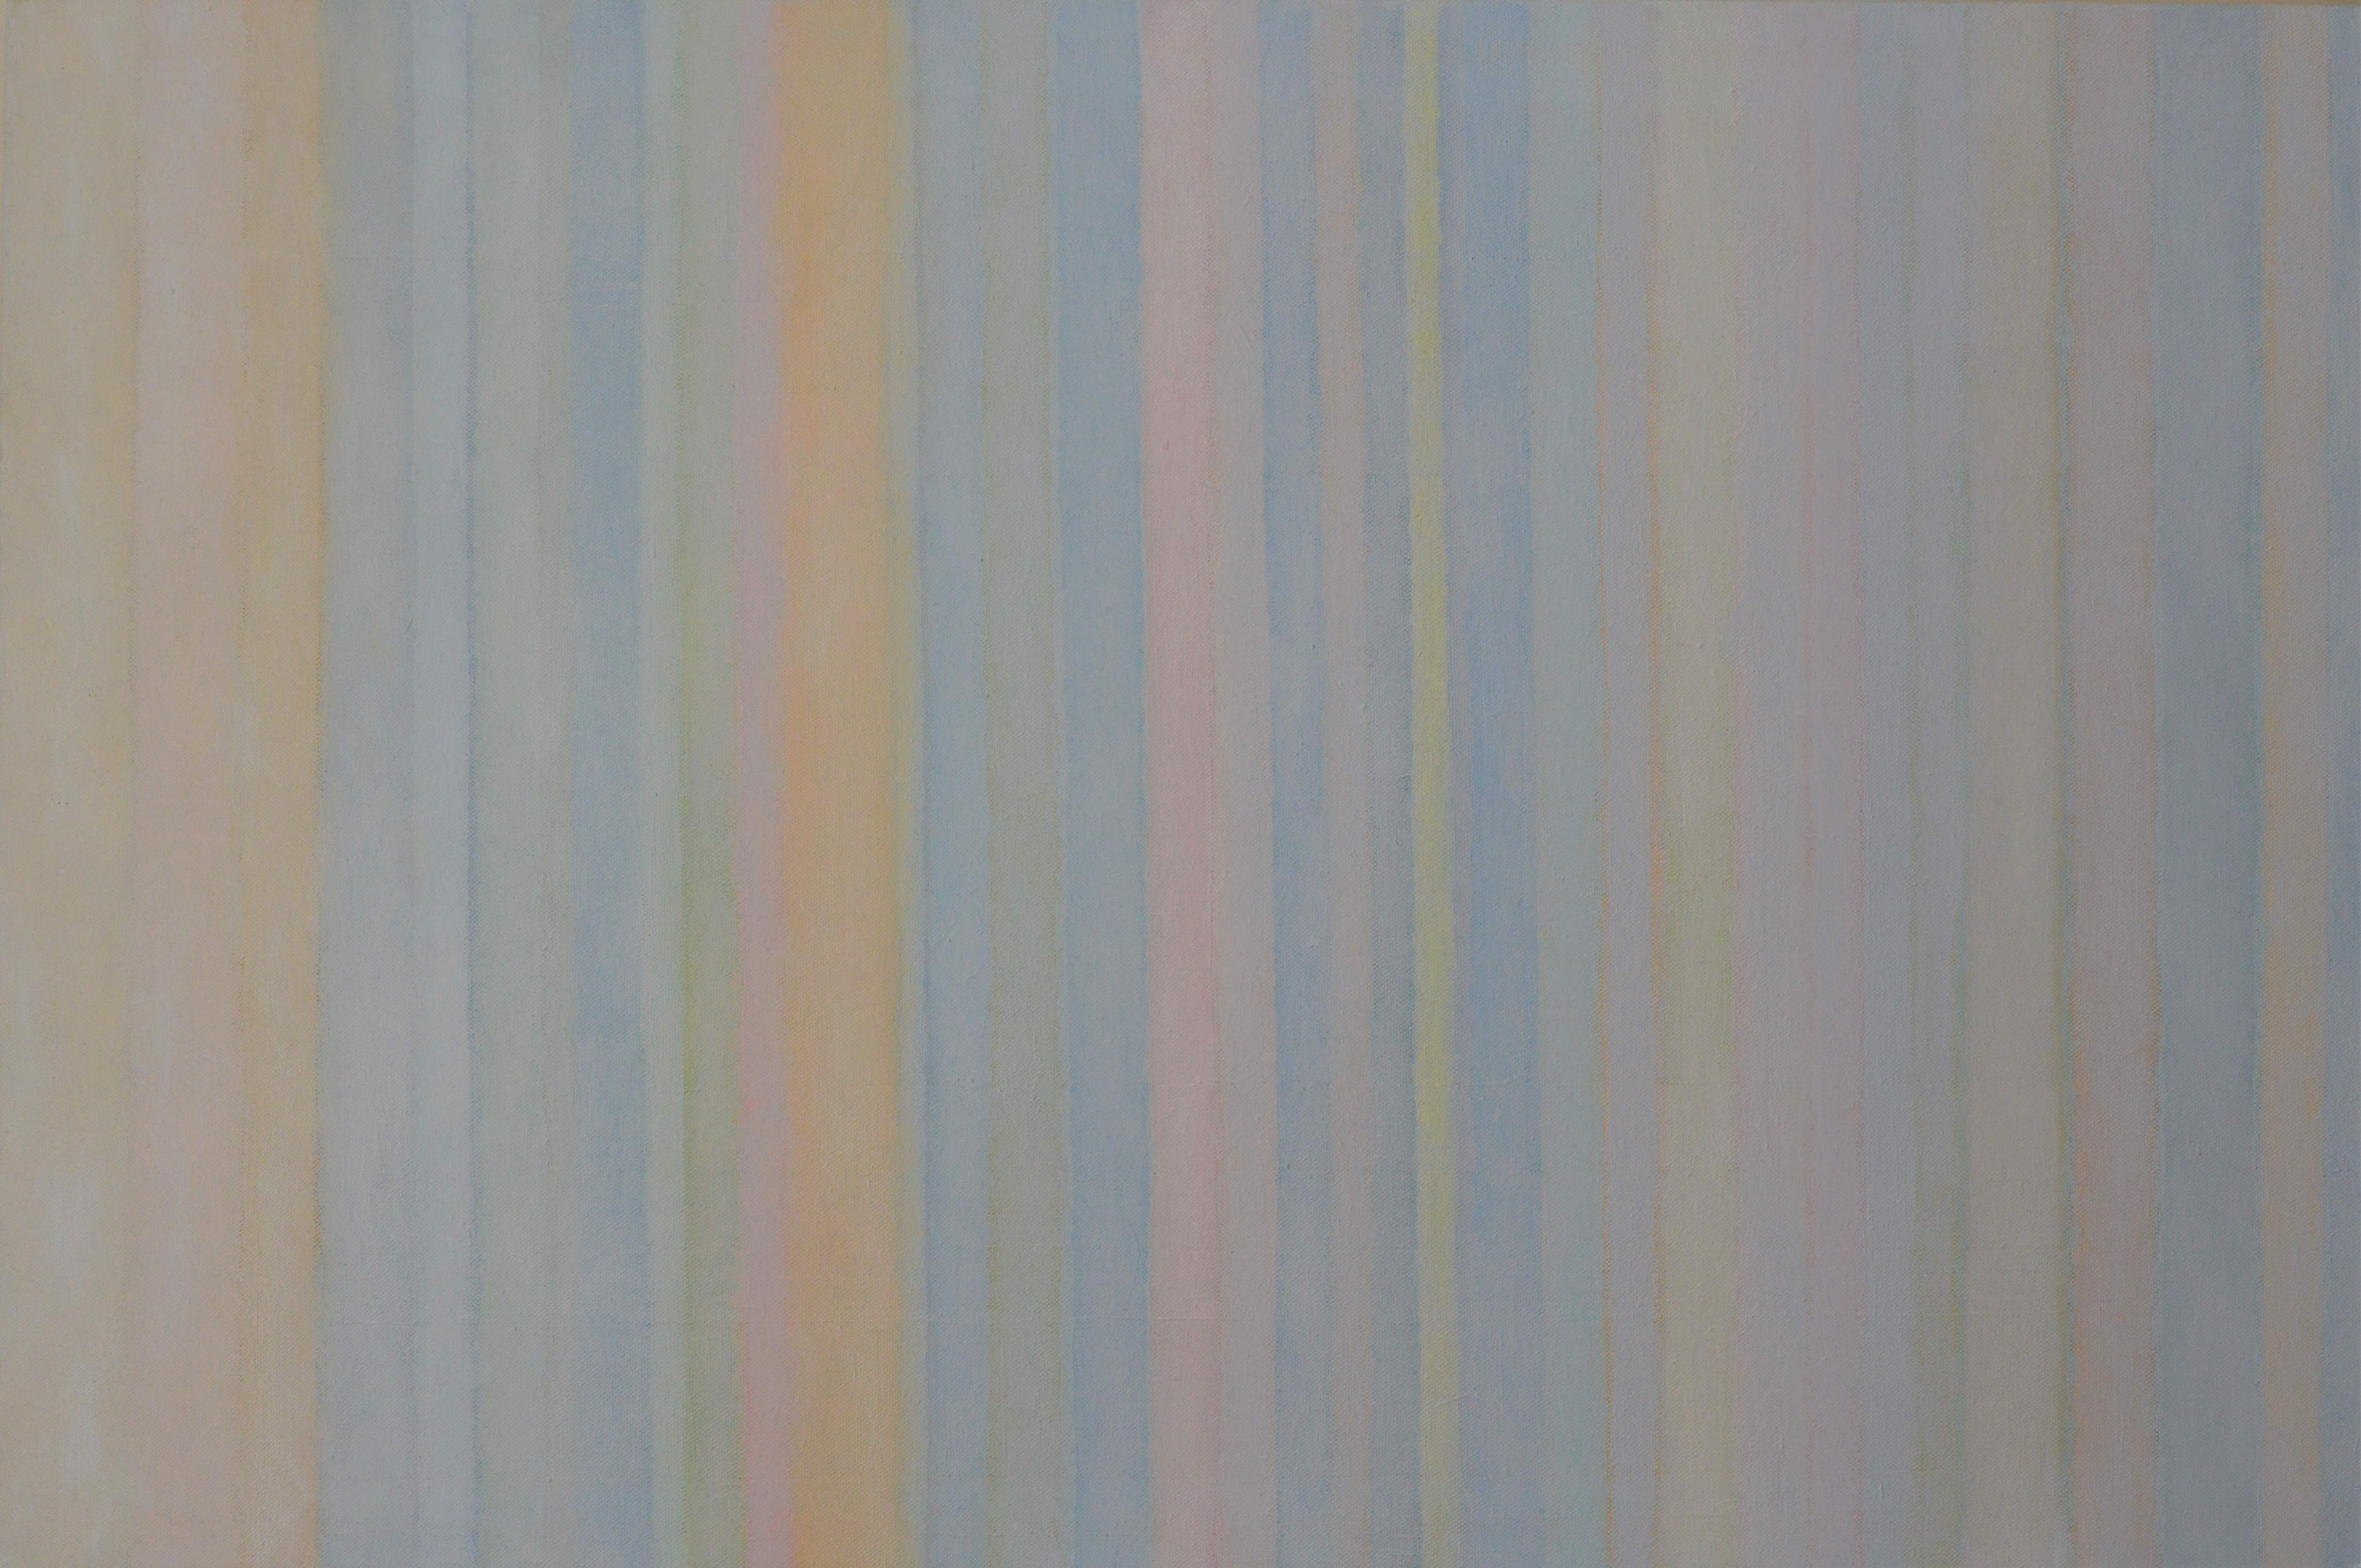 'Patterning # 4' 2020. Oil on canvas, 90 cm x 60 cm.